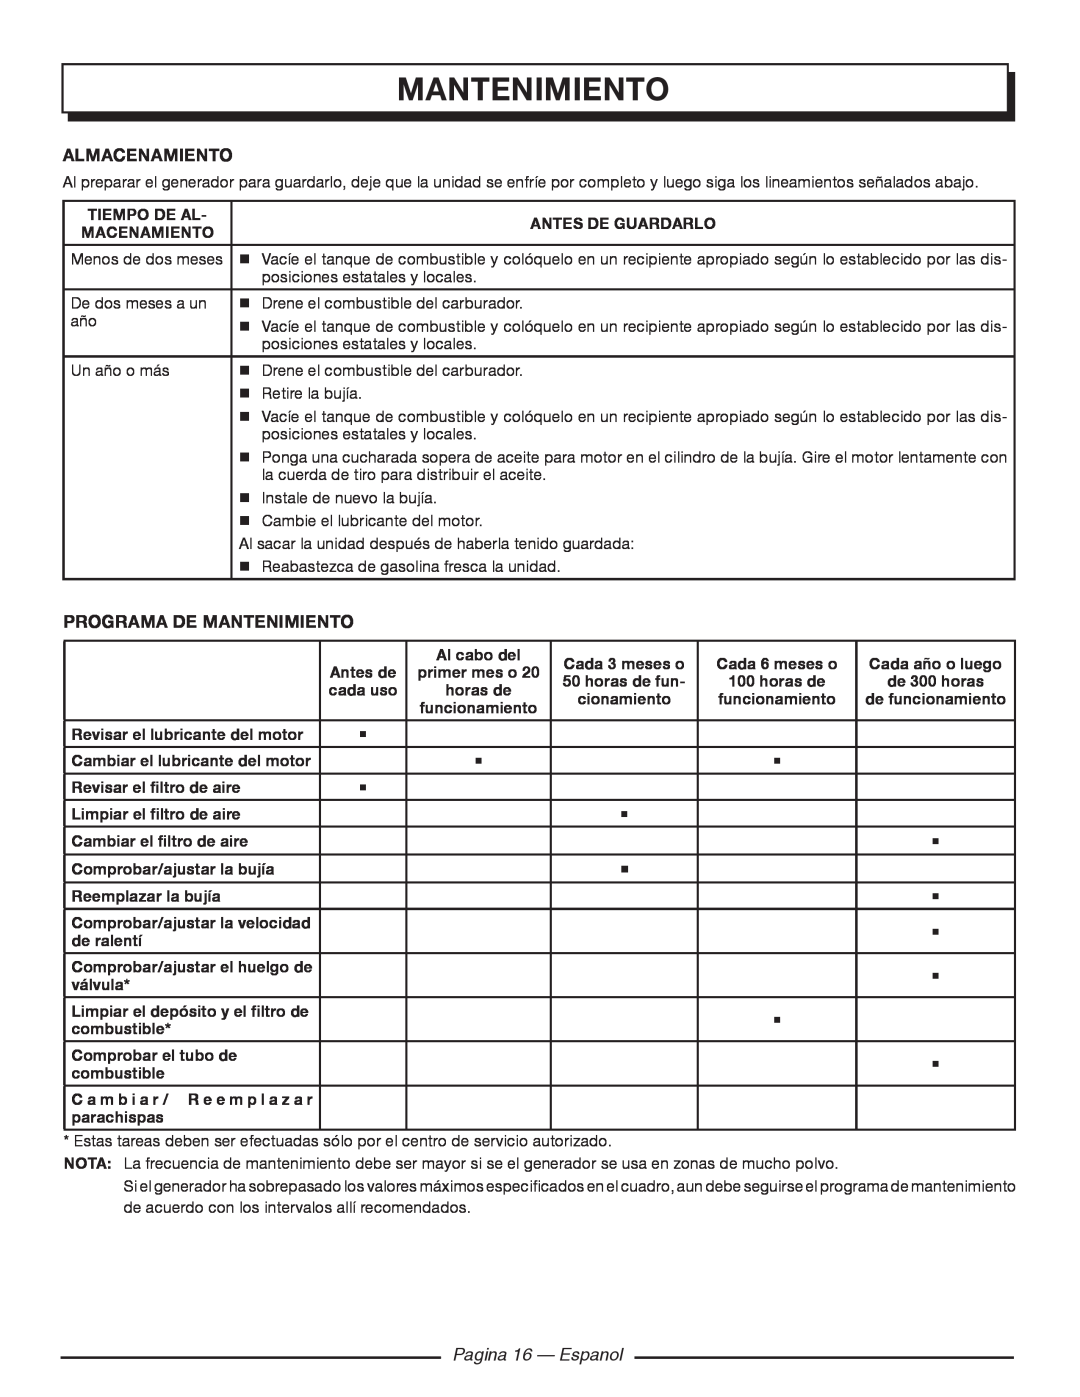 Homelite HGCA1400 manuel dutilisation almacenamiento, Programa De Mantenimiento, Pagina 16 - Espanol 